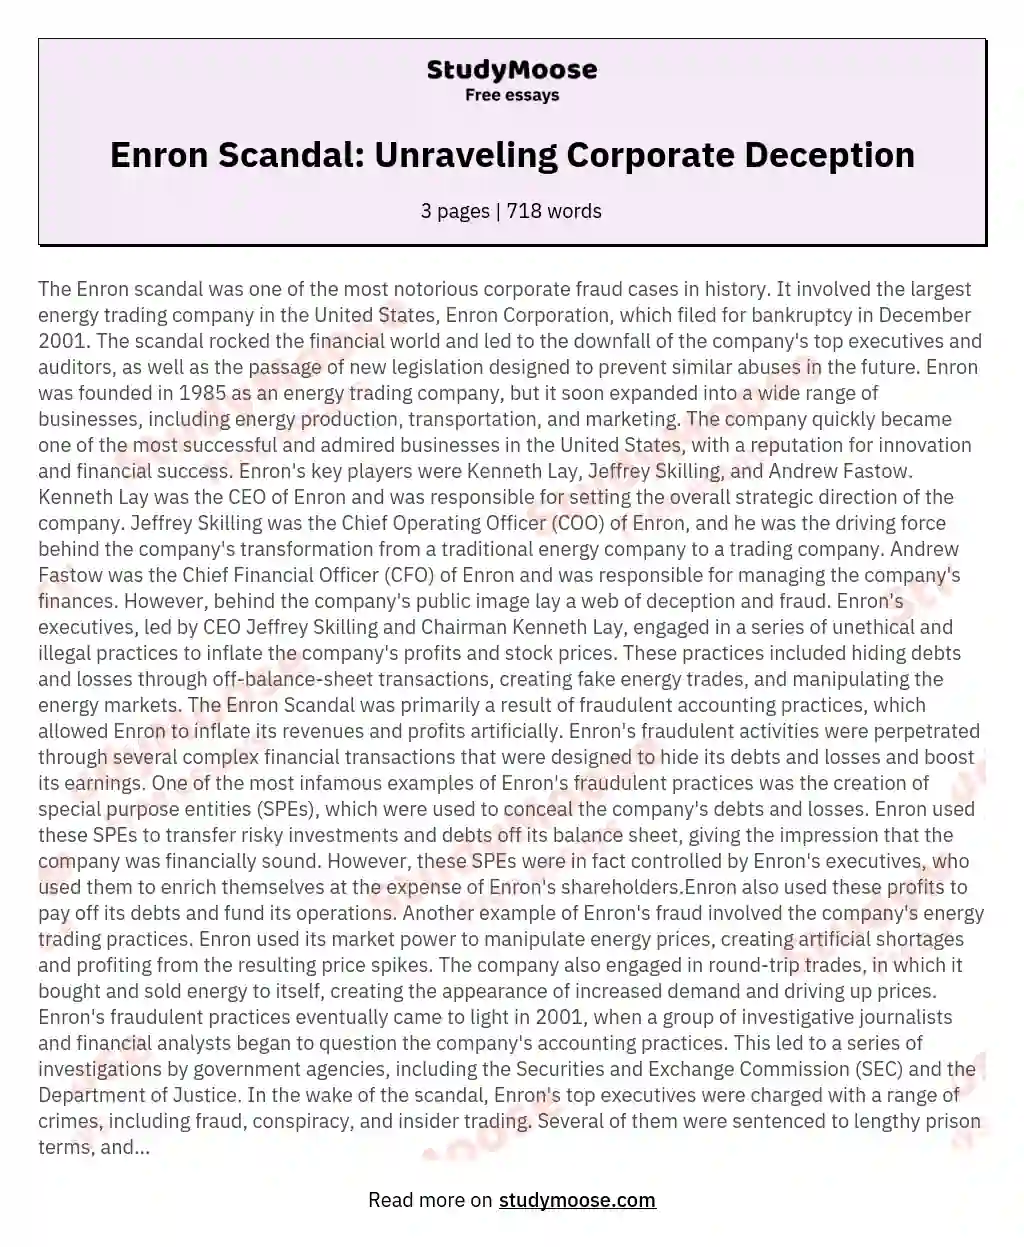 Enron Scandal: Unraveling Corporate Deception essay